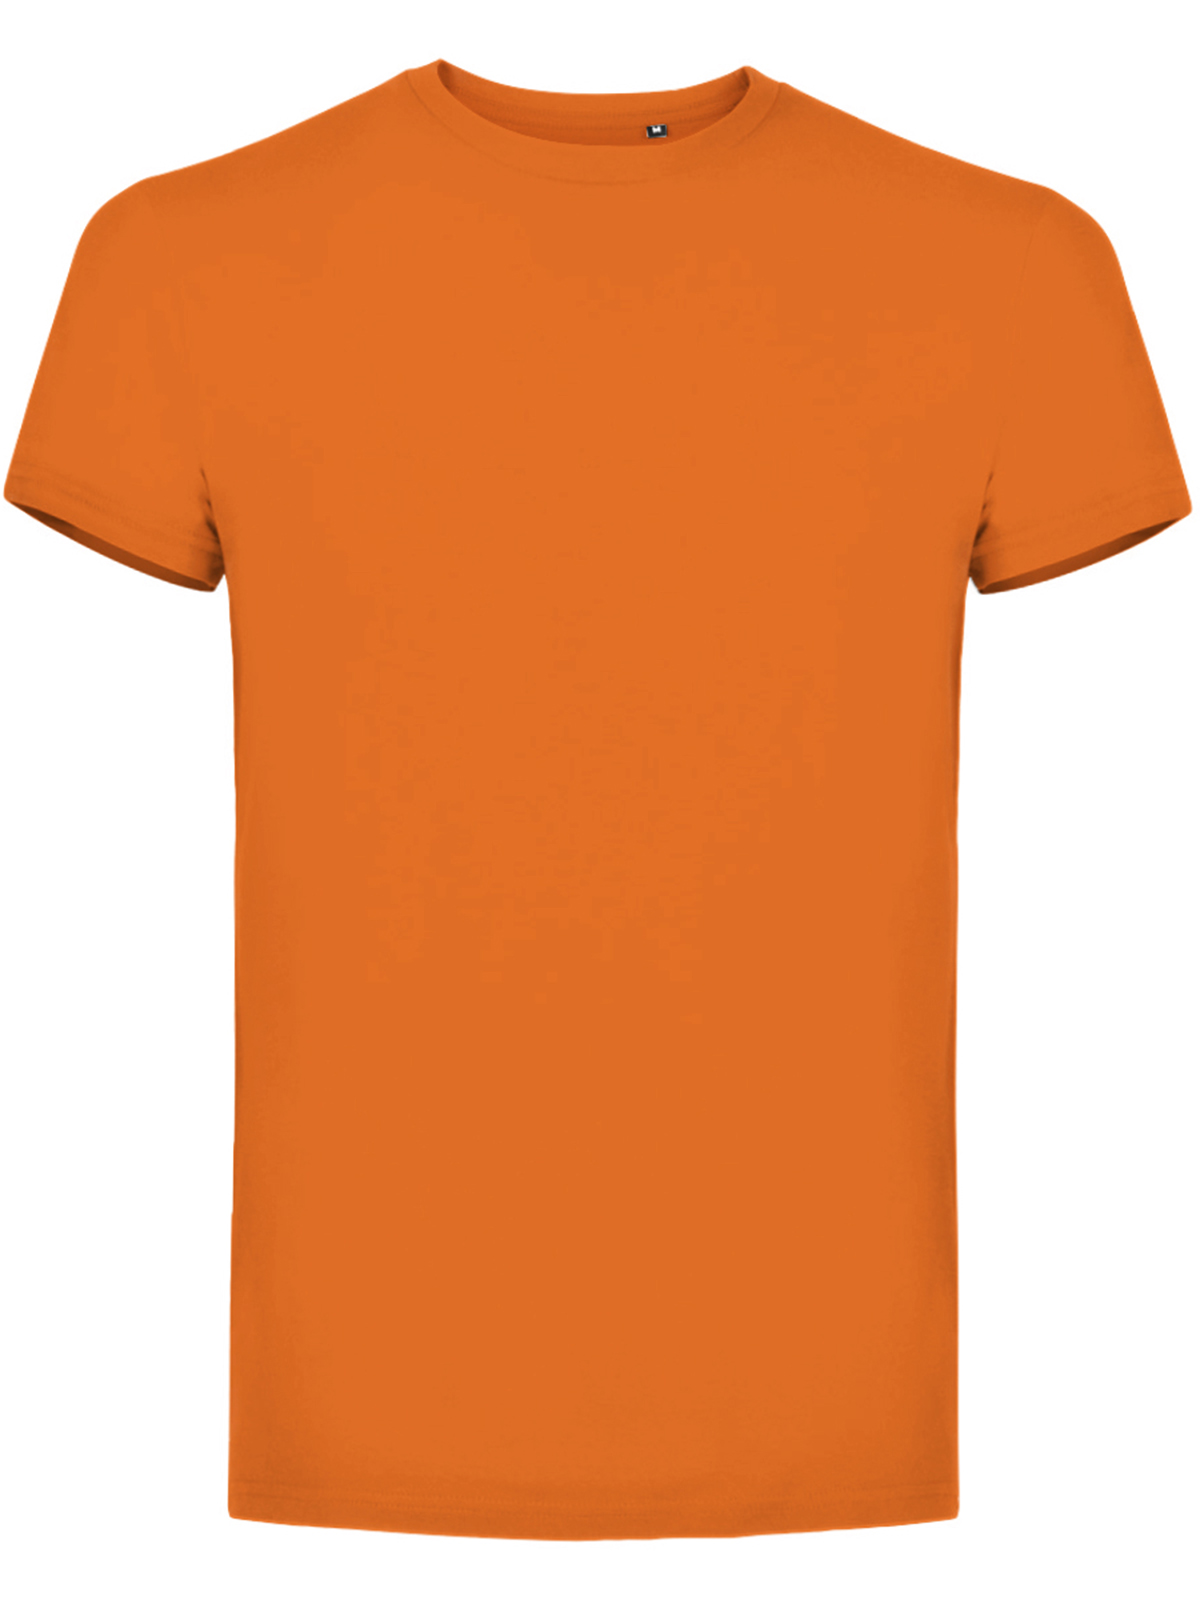 sustainable-t-bright-orange.webp